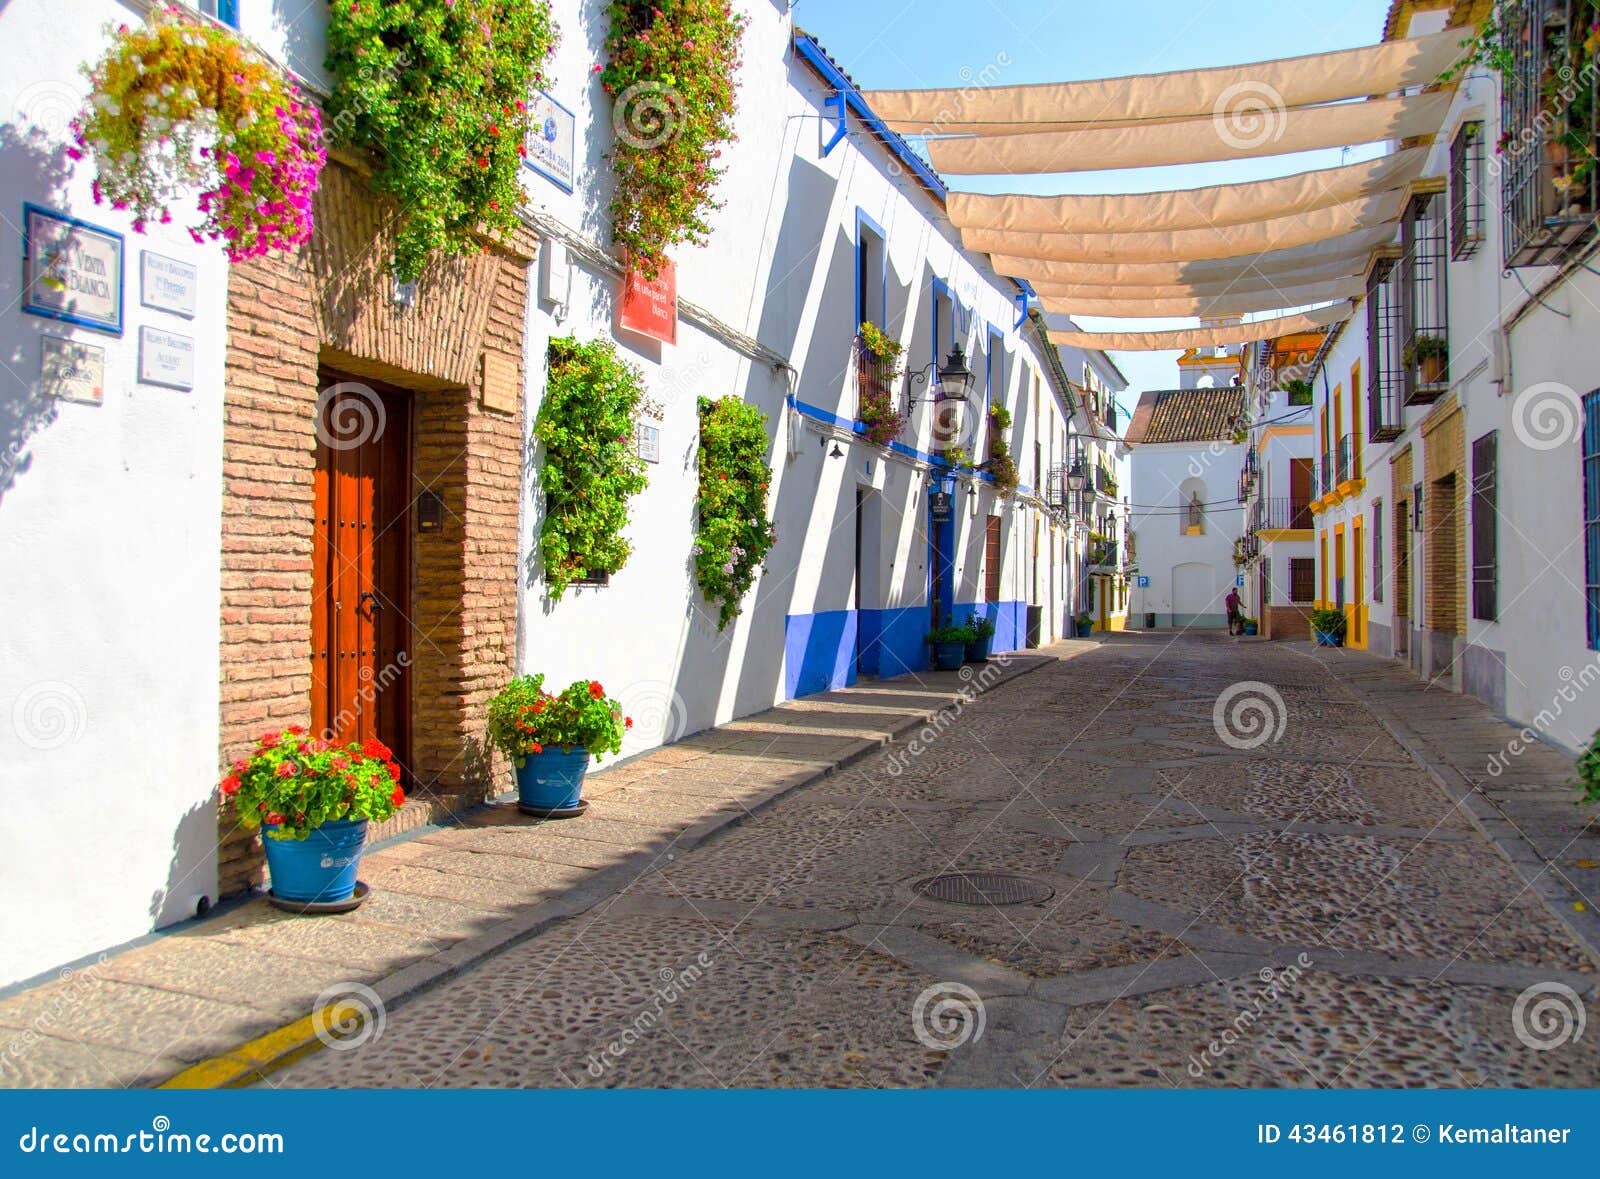 street with flowers in cordoba (calleja de las flores)